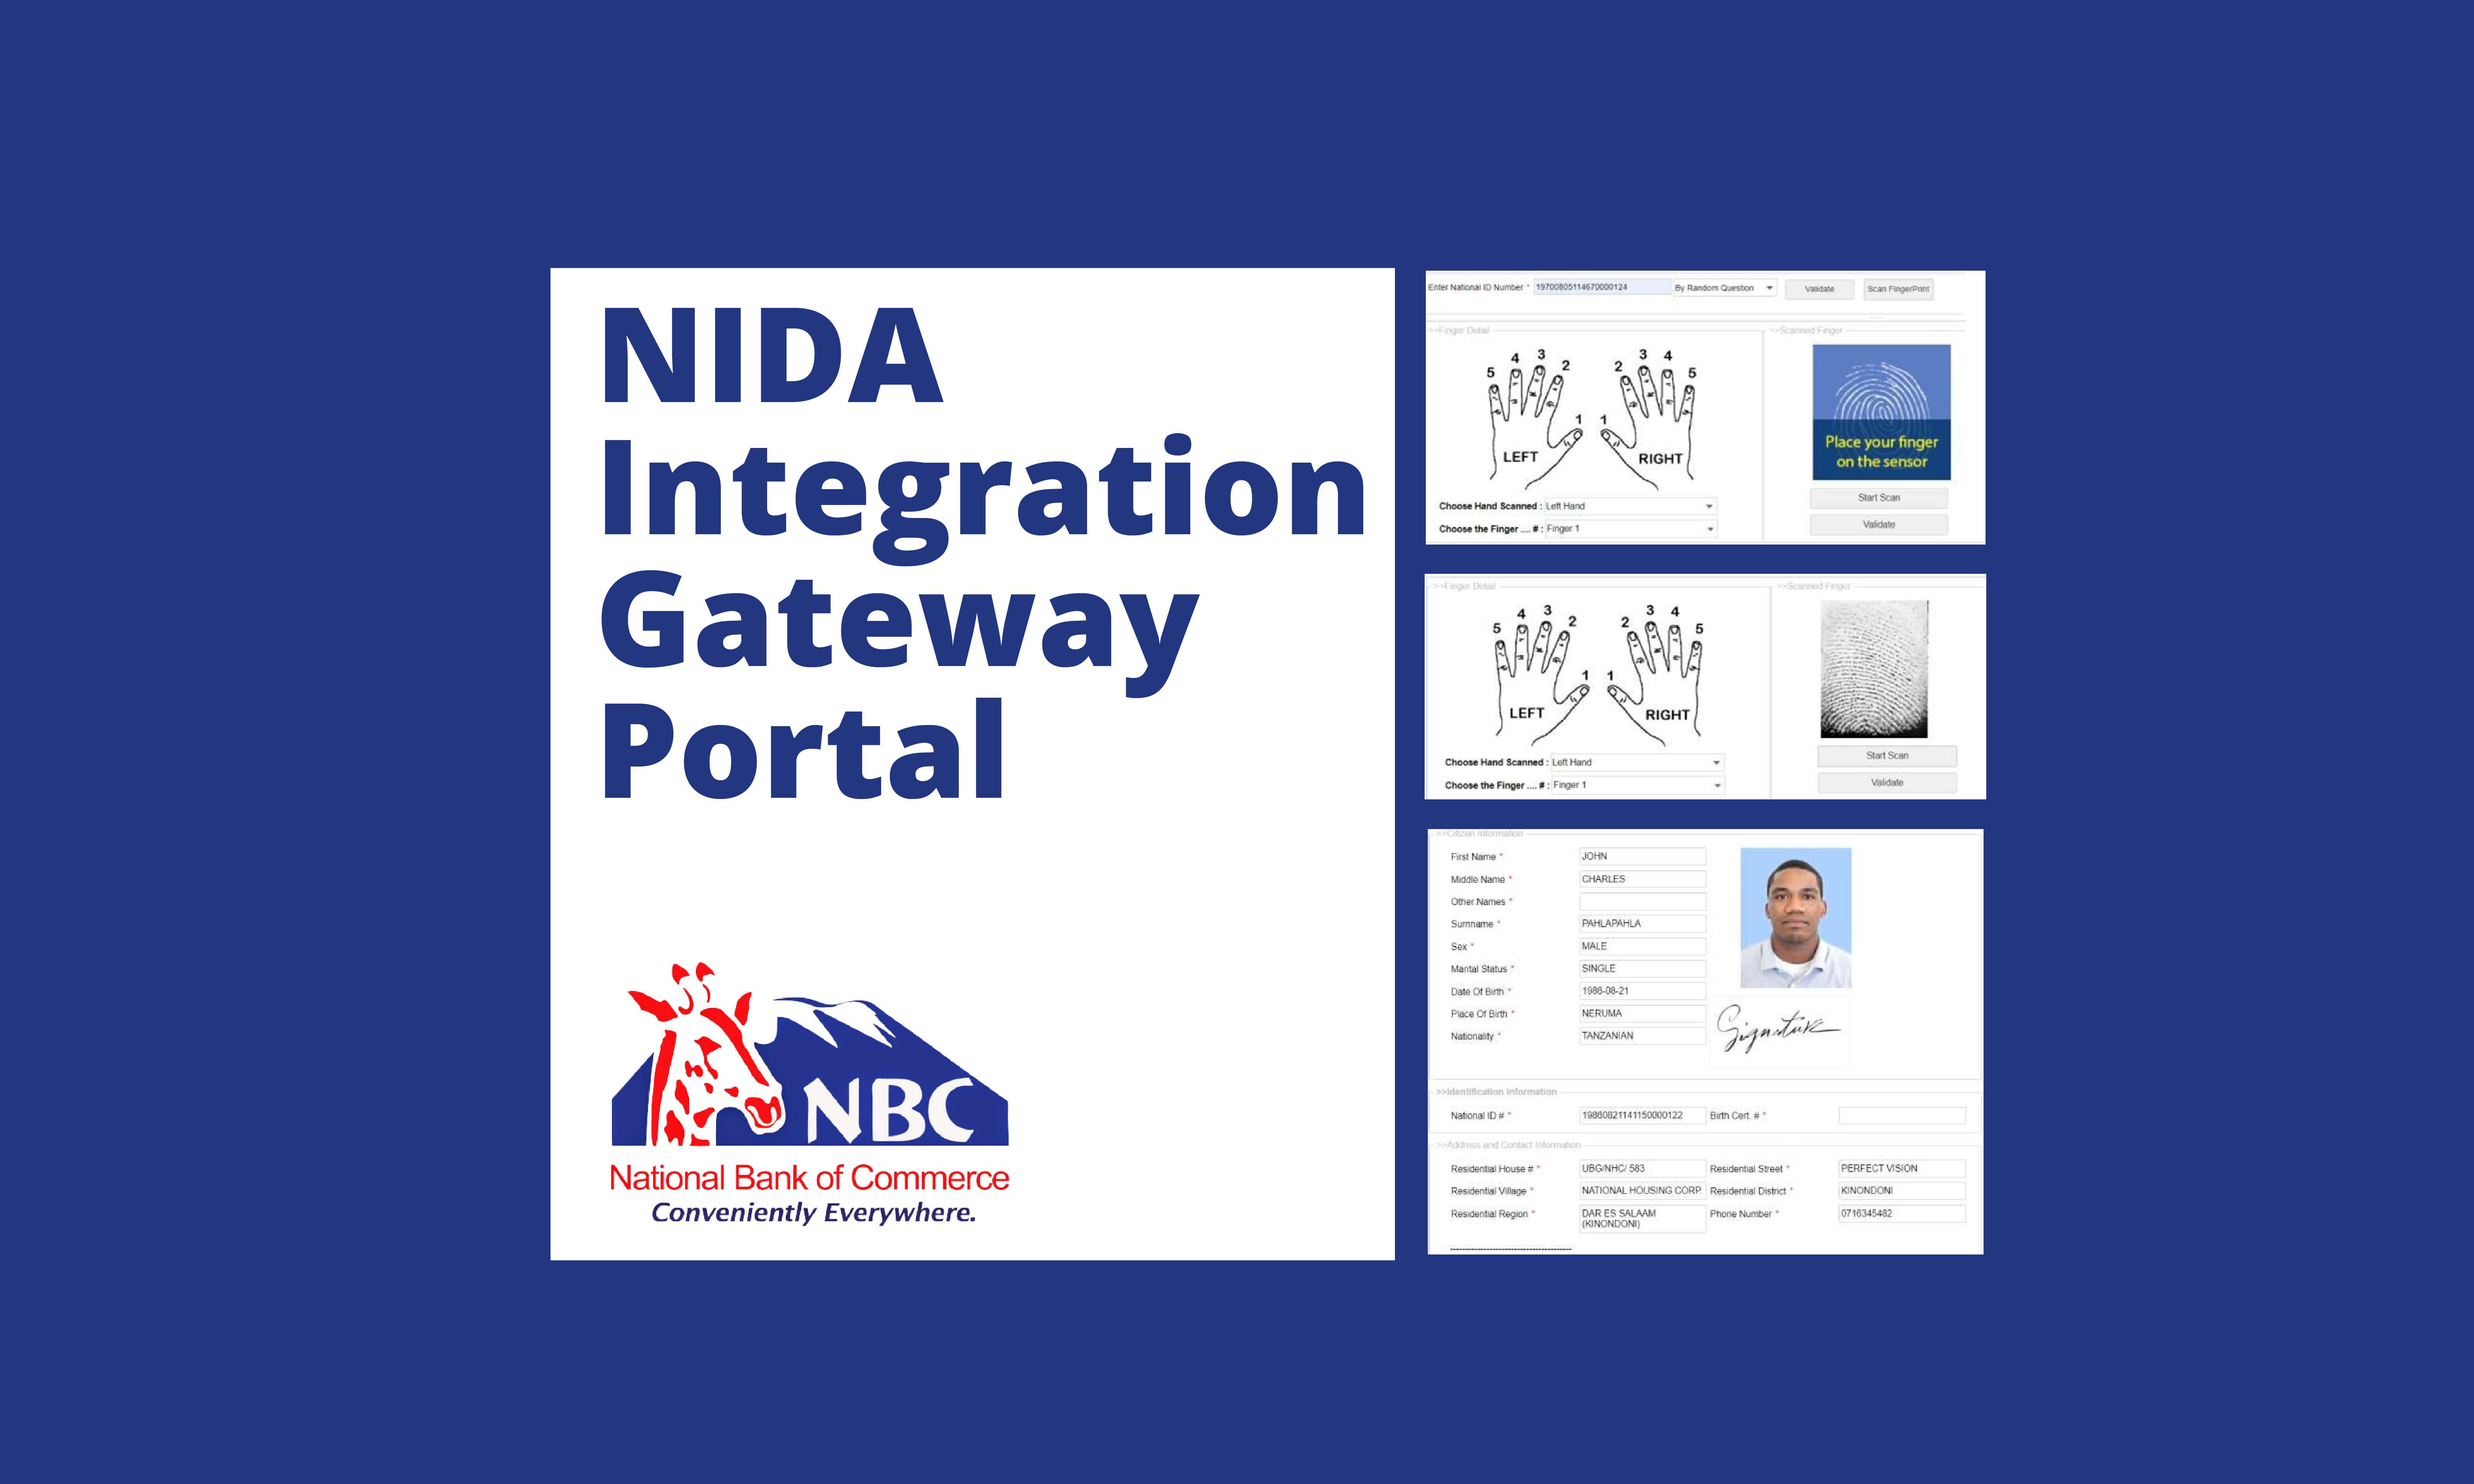 National Bank of Commerce (NBC) NIDA Integration